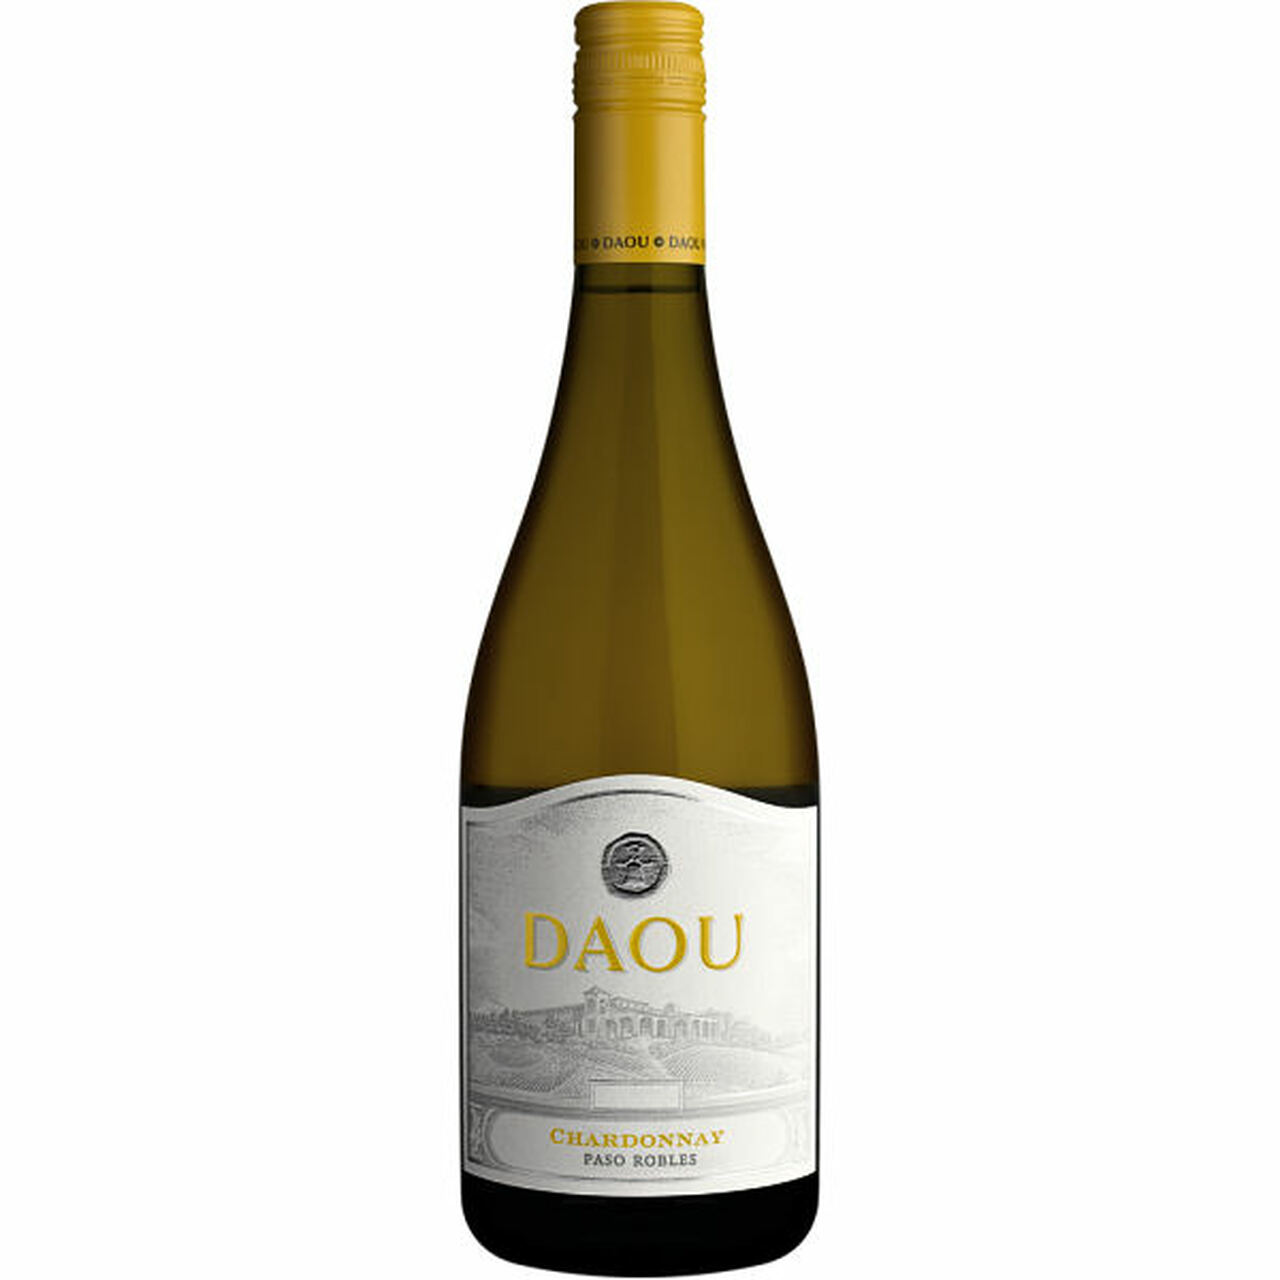 Daou Paso Robles Chardonnay 2020 (750ml)